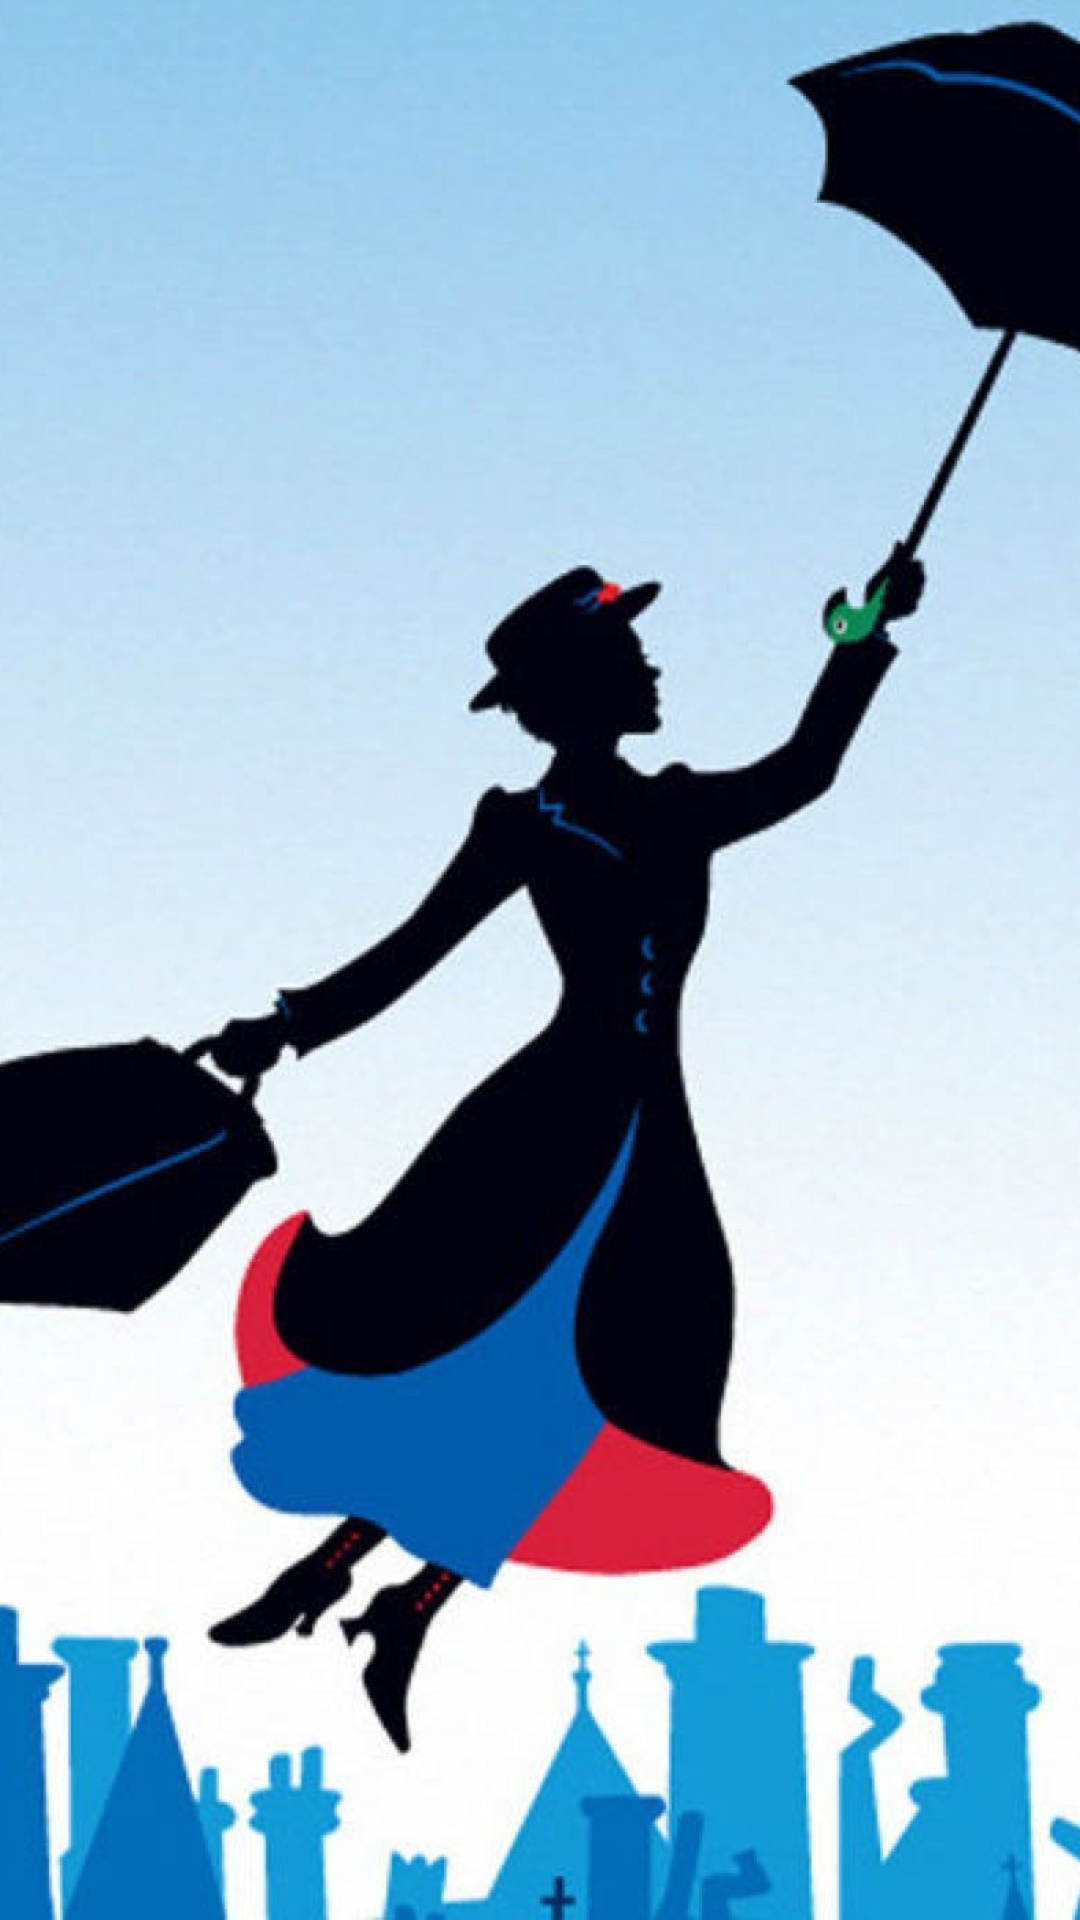 Mary Poppins 55th anniversary by zielinskijoseph on DeviantArt